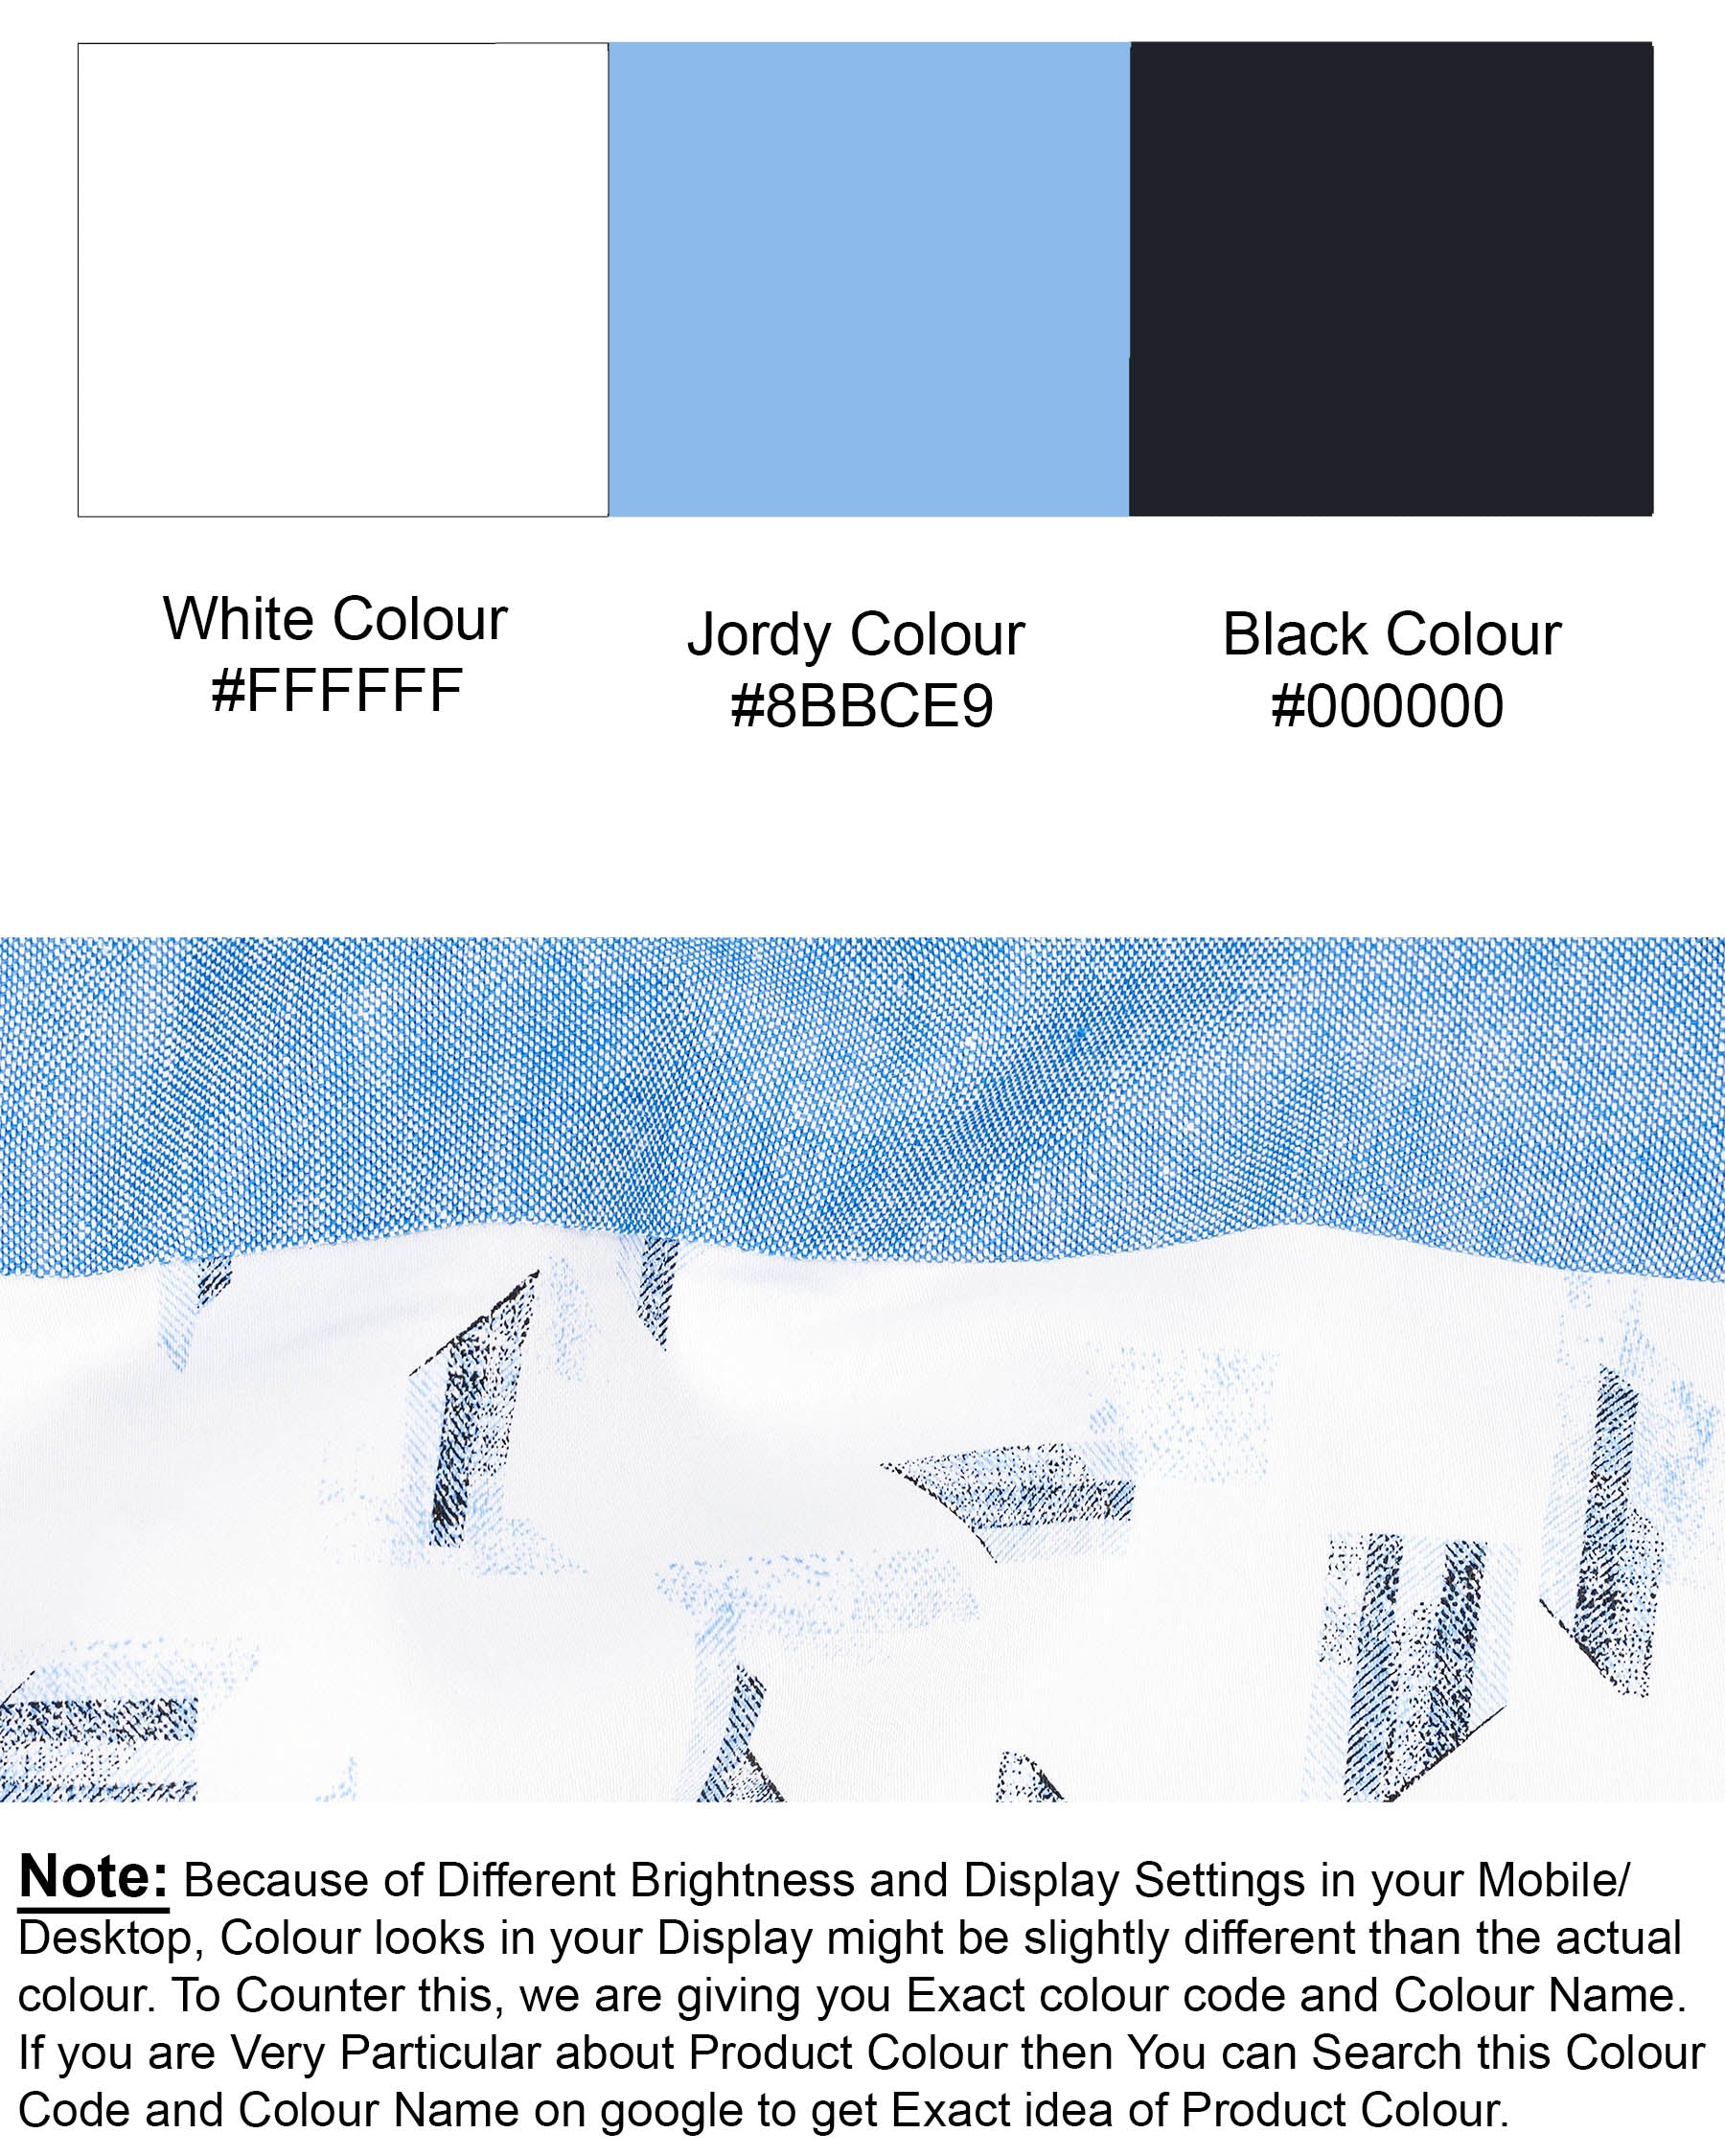 Bright White and Jordy Blue Printed Super Soft Premium Cotton Designer Shirt 7679-P212-38, 7679-P212-H-38, 7679-P212-39,7679-P212-H-39, 7679-P212-40, 7679-P212-H-40, 7679-P212-42, 7679-P212-H-42, 7679-P212-44, 7679-P212-H-44, 7679-P212-46, 7679-P212-H-46, 7679-P212-48, 7679-P212-H-48, 7679-P212-50, 7679-P212-H-50, 7679-P212-52, 7679-P212-H-52